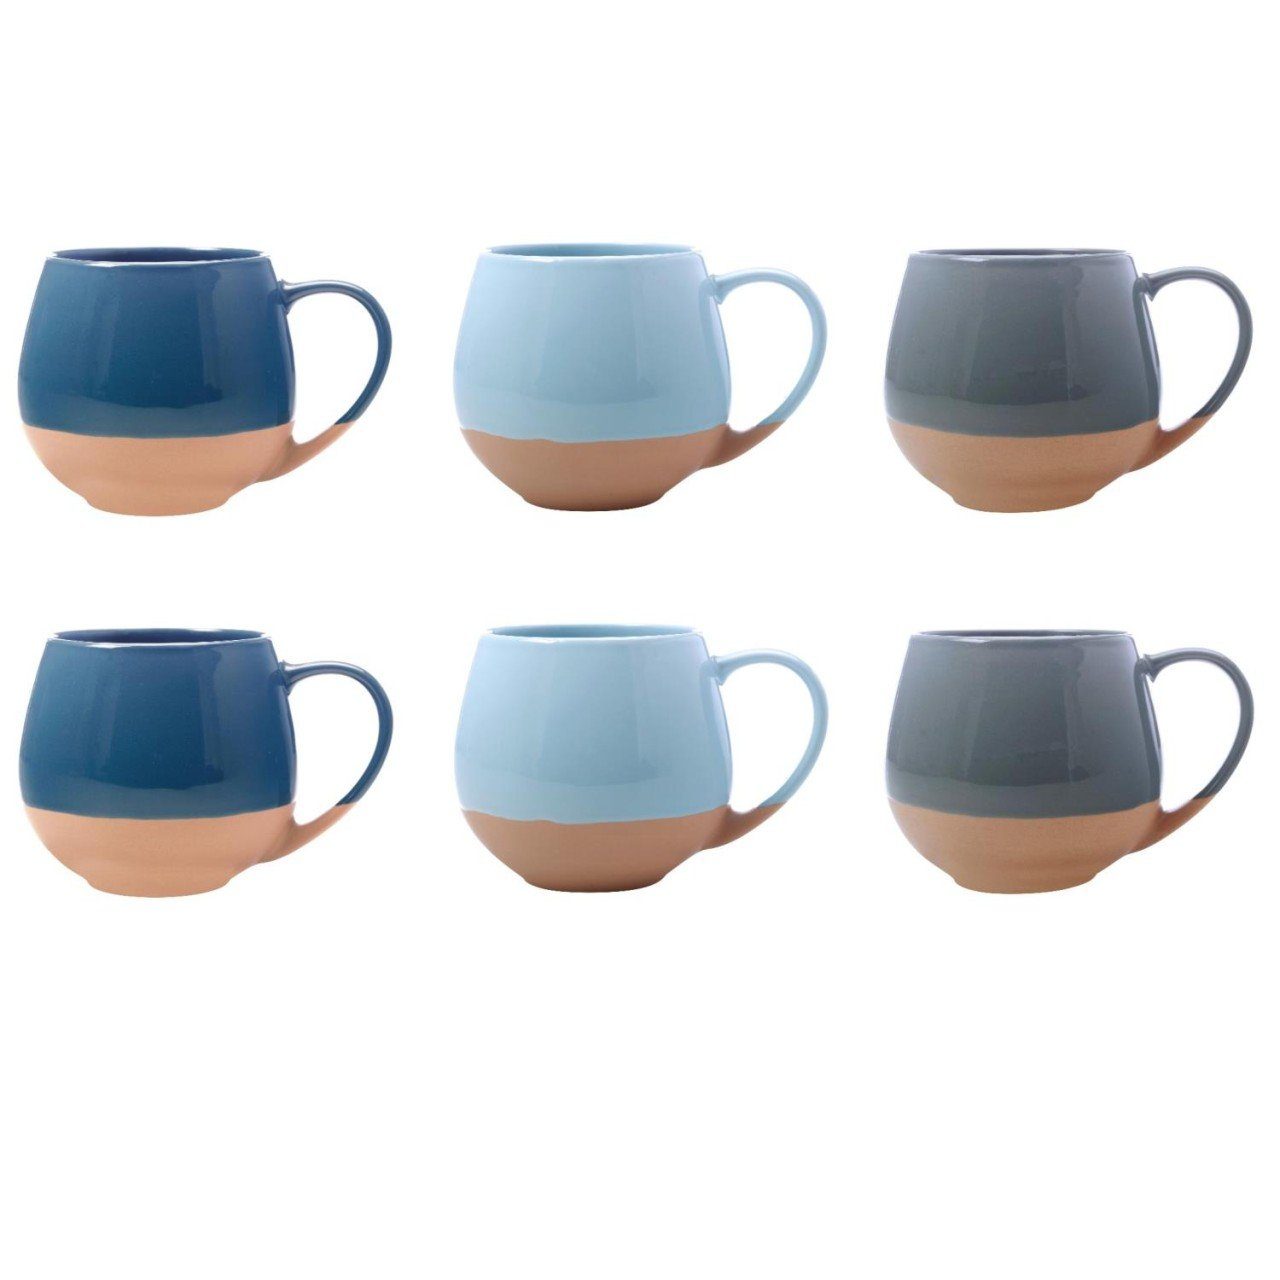 Blau Eclipse, & Becher Maxwell H:10cm L:13.5cm Keramik, Williams D:11cm Keramik